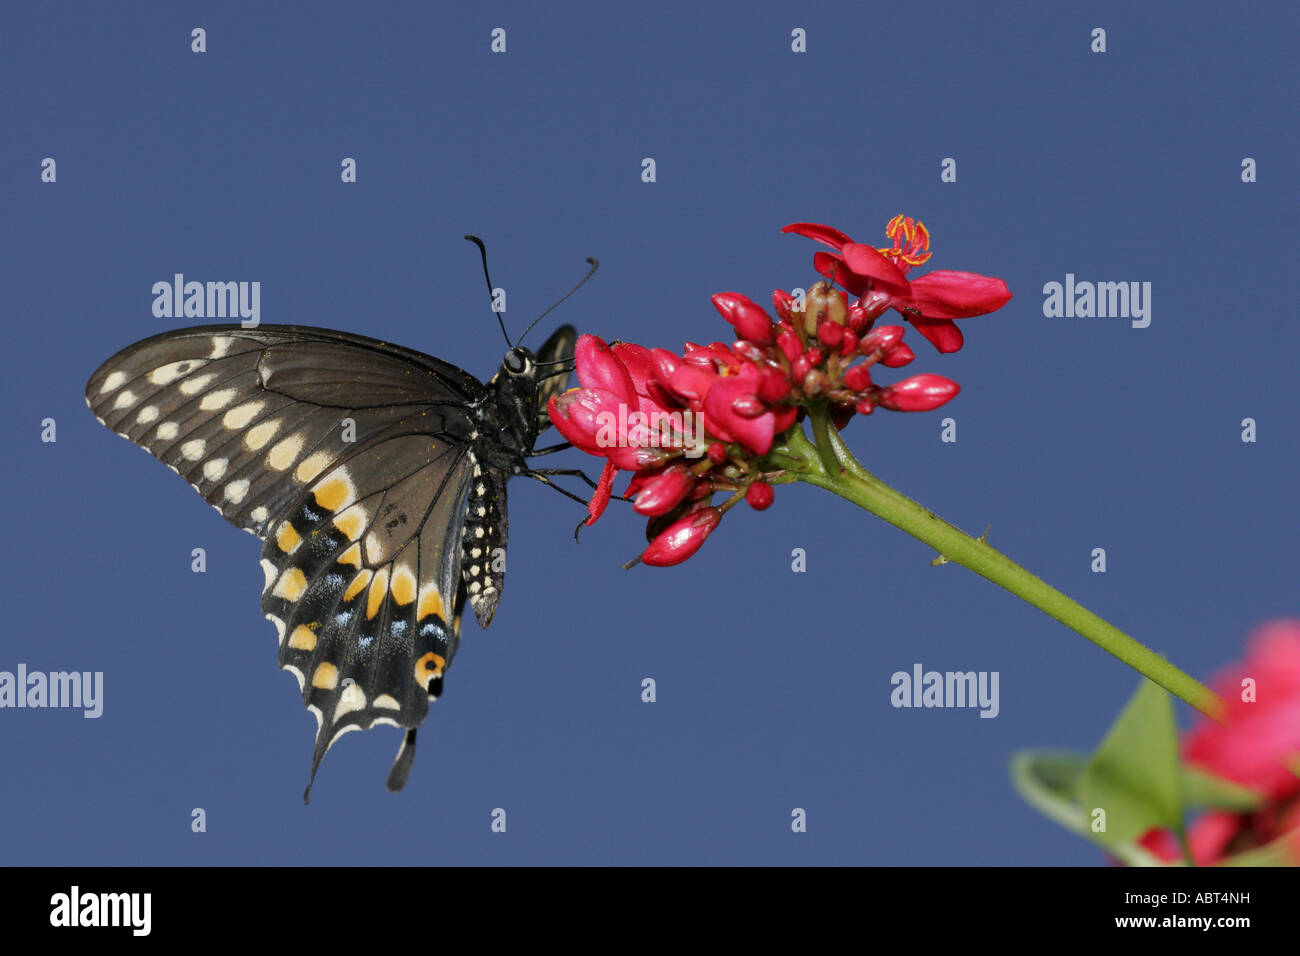 Black Swallowtail butterfly on Jatrophe Stock Photo